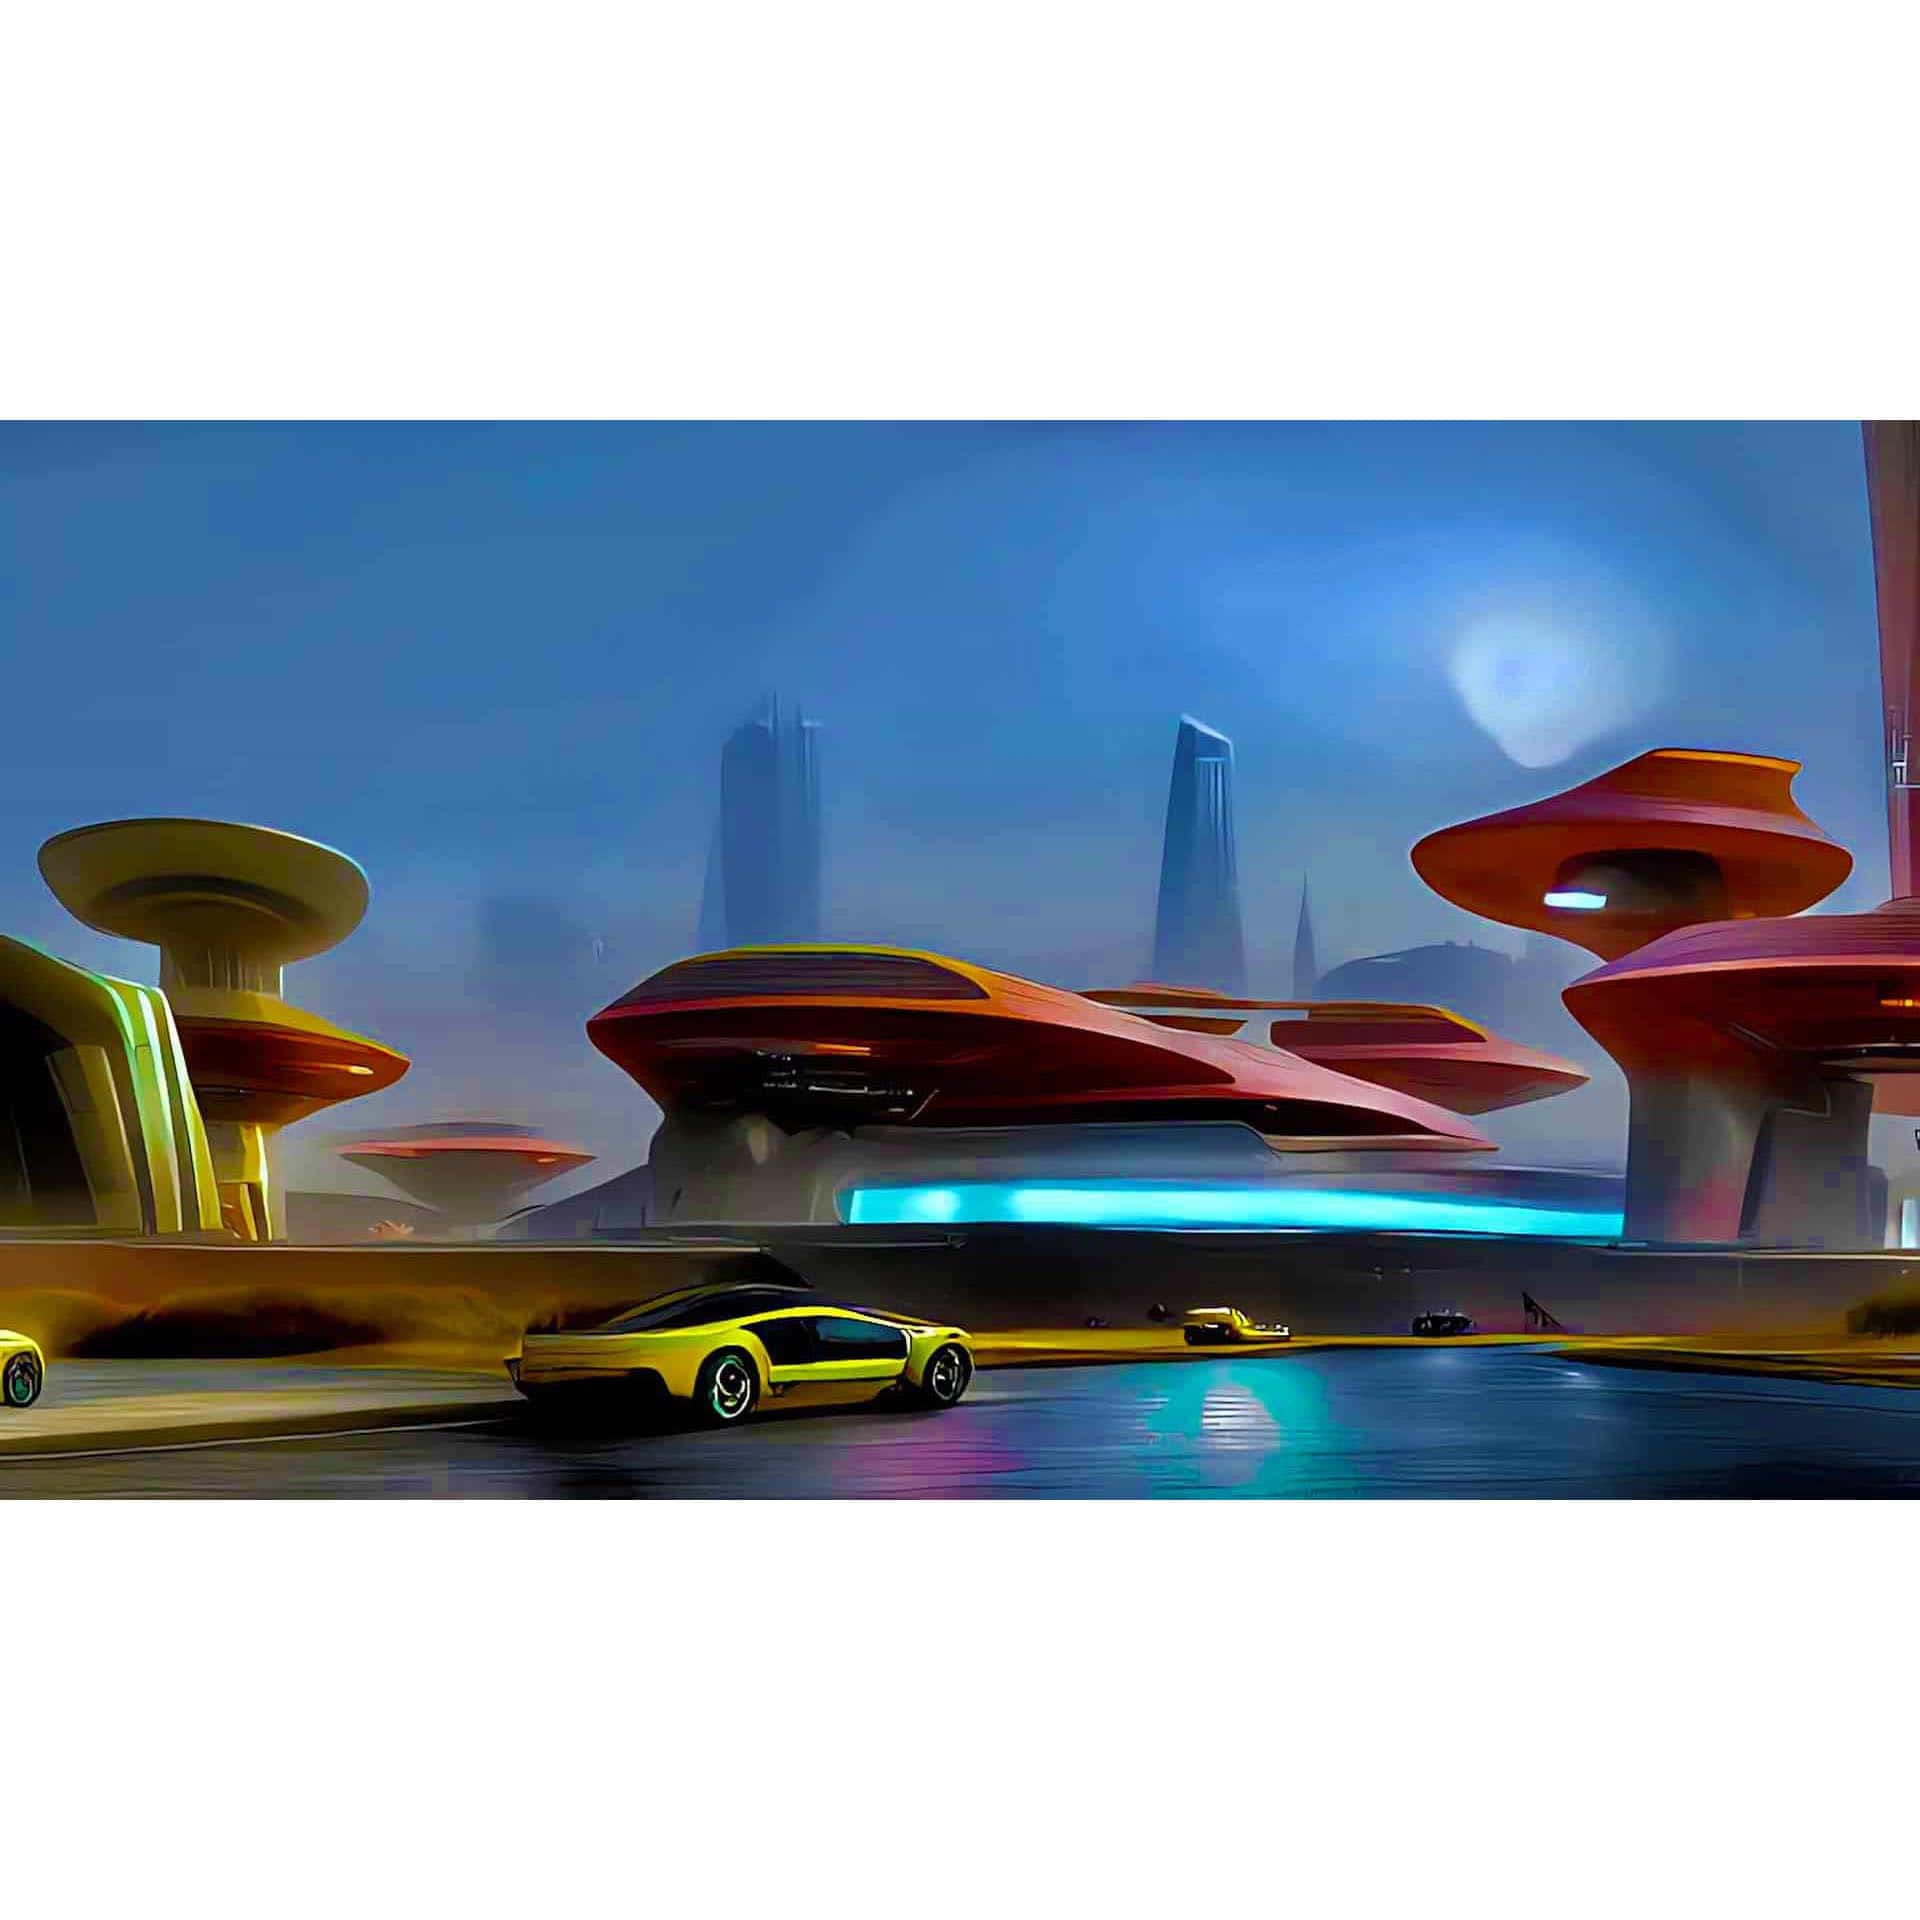 Diamond Painting - Futurezone - gedruckt in Ultra-HD - Auto, Fantasy, Horizontal, Zukunft